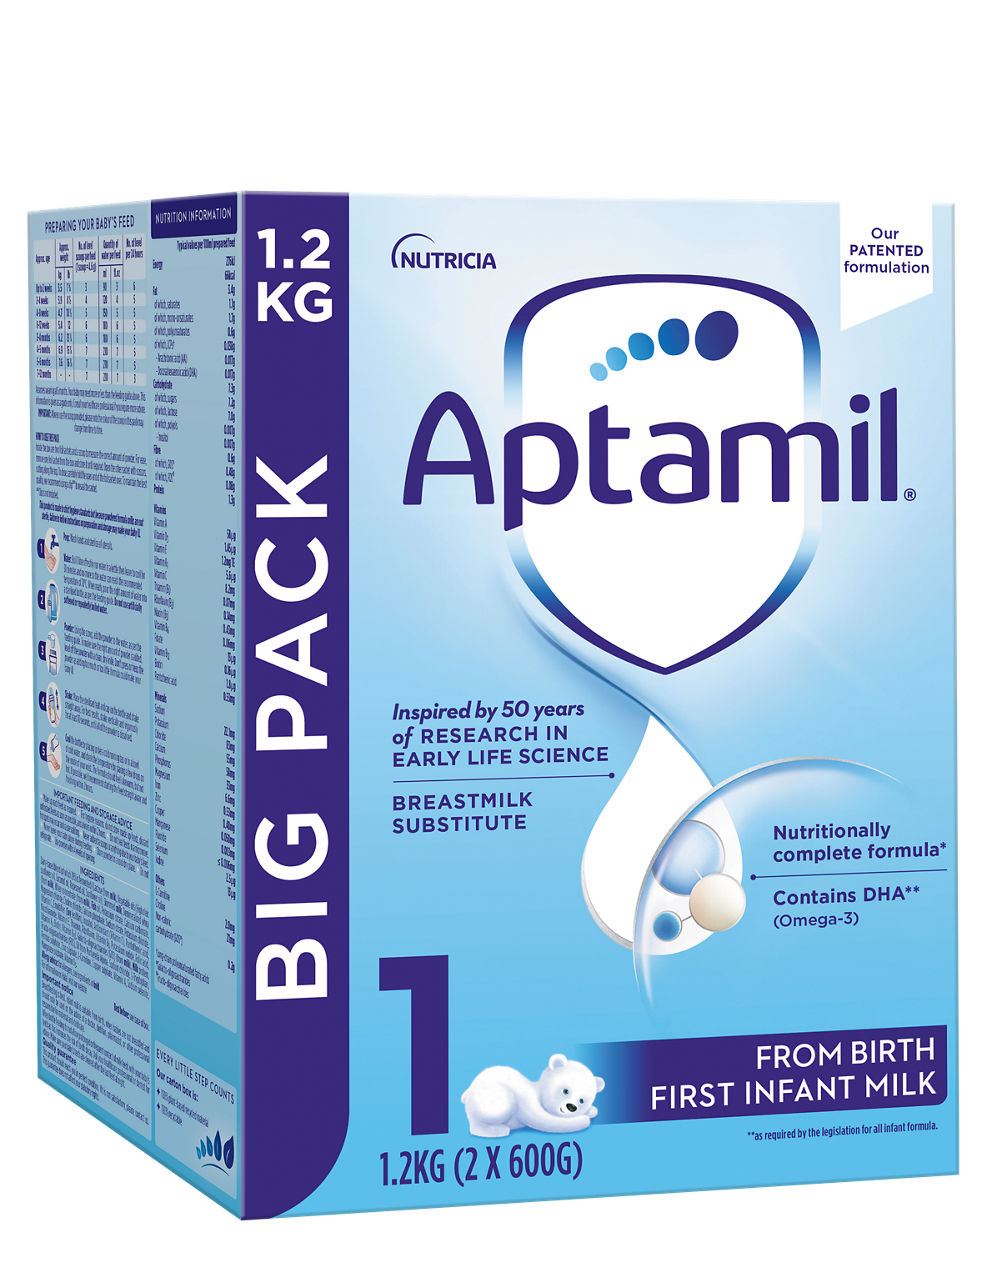 Aptamil 1 First Infant Milk from Birth 2 x 600g (1.2kg)